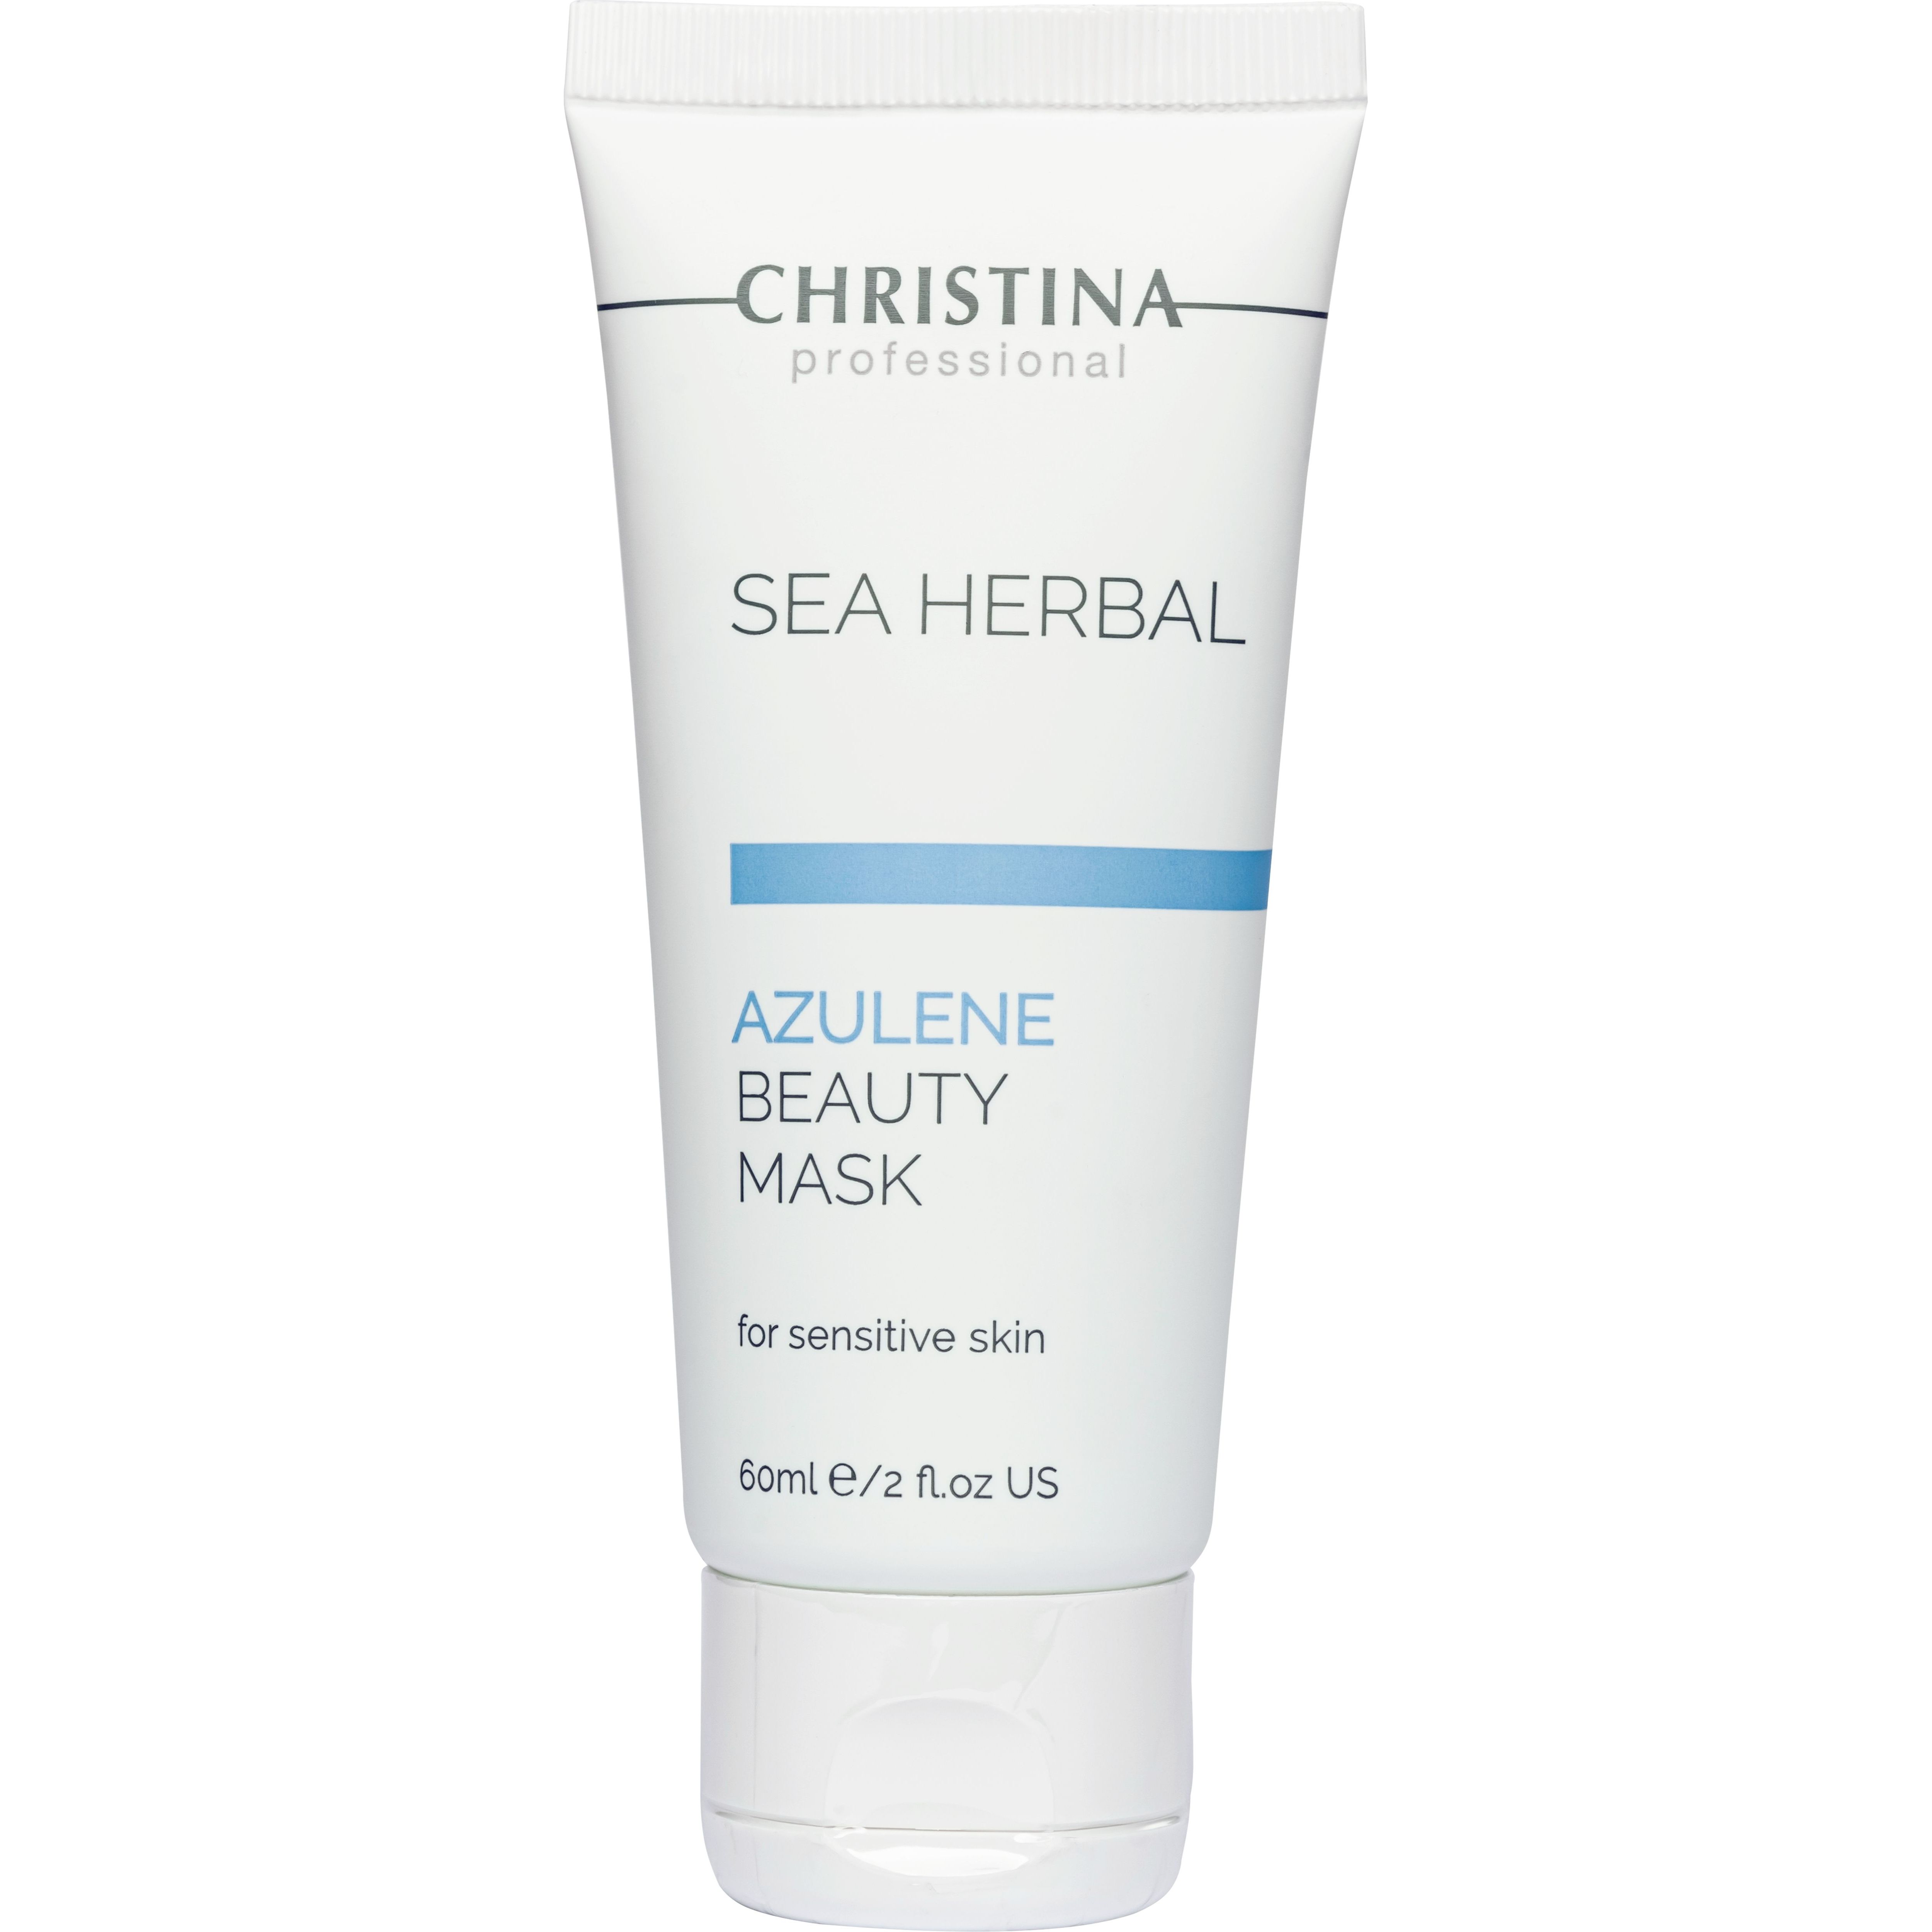 Азуленовая маска красоты для чувствительной кожи Christina Sea Herbal Beauty Mask Azulene For Sensitive Skin, 60 мл - фото 1